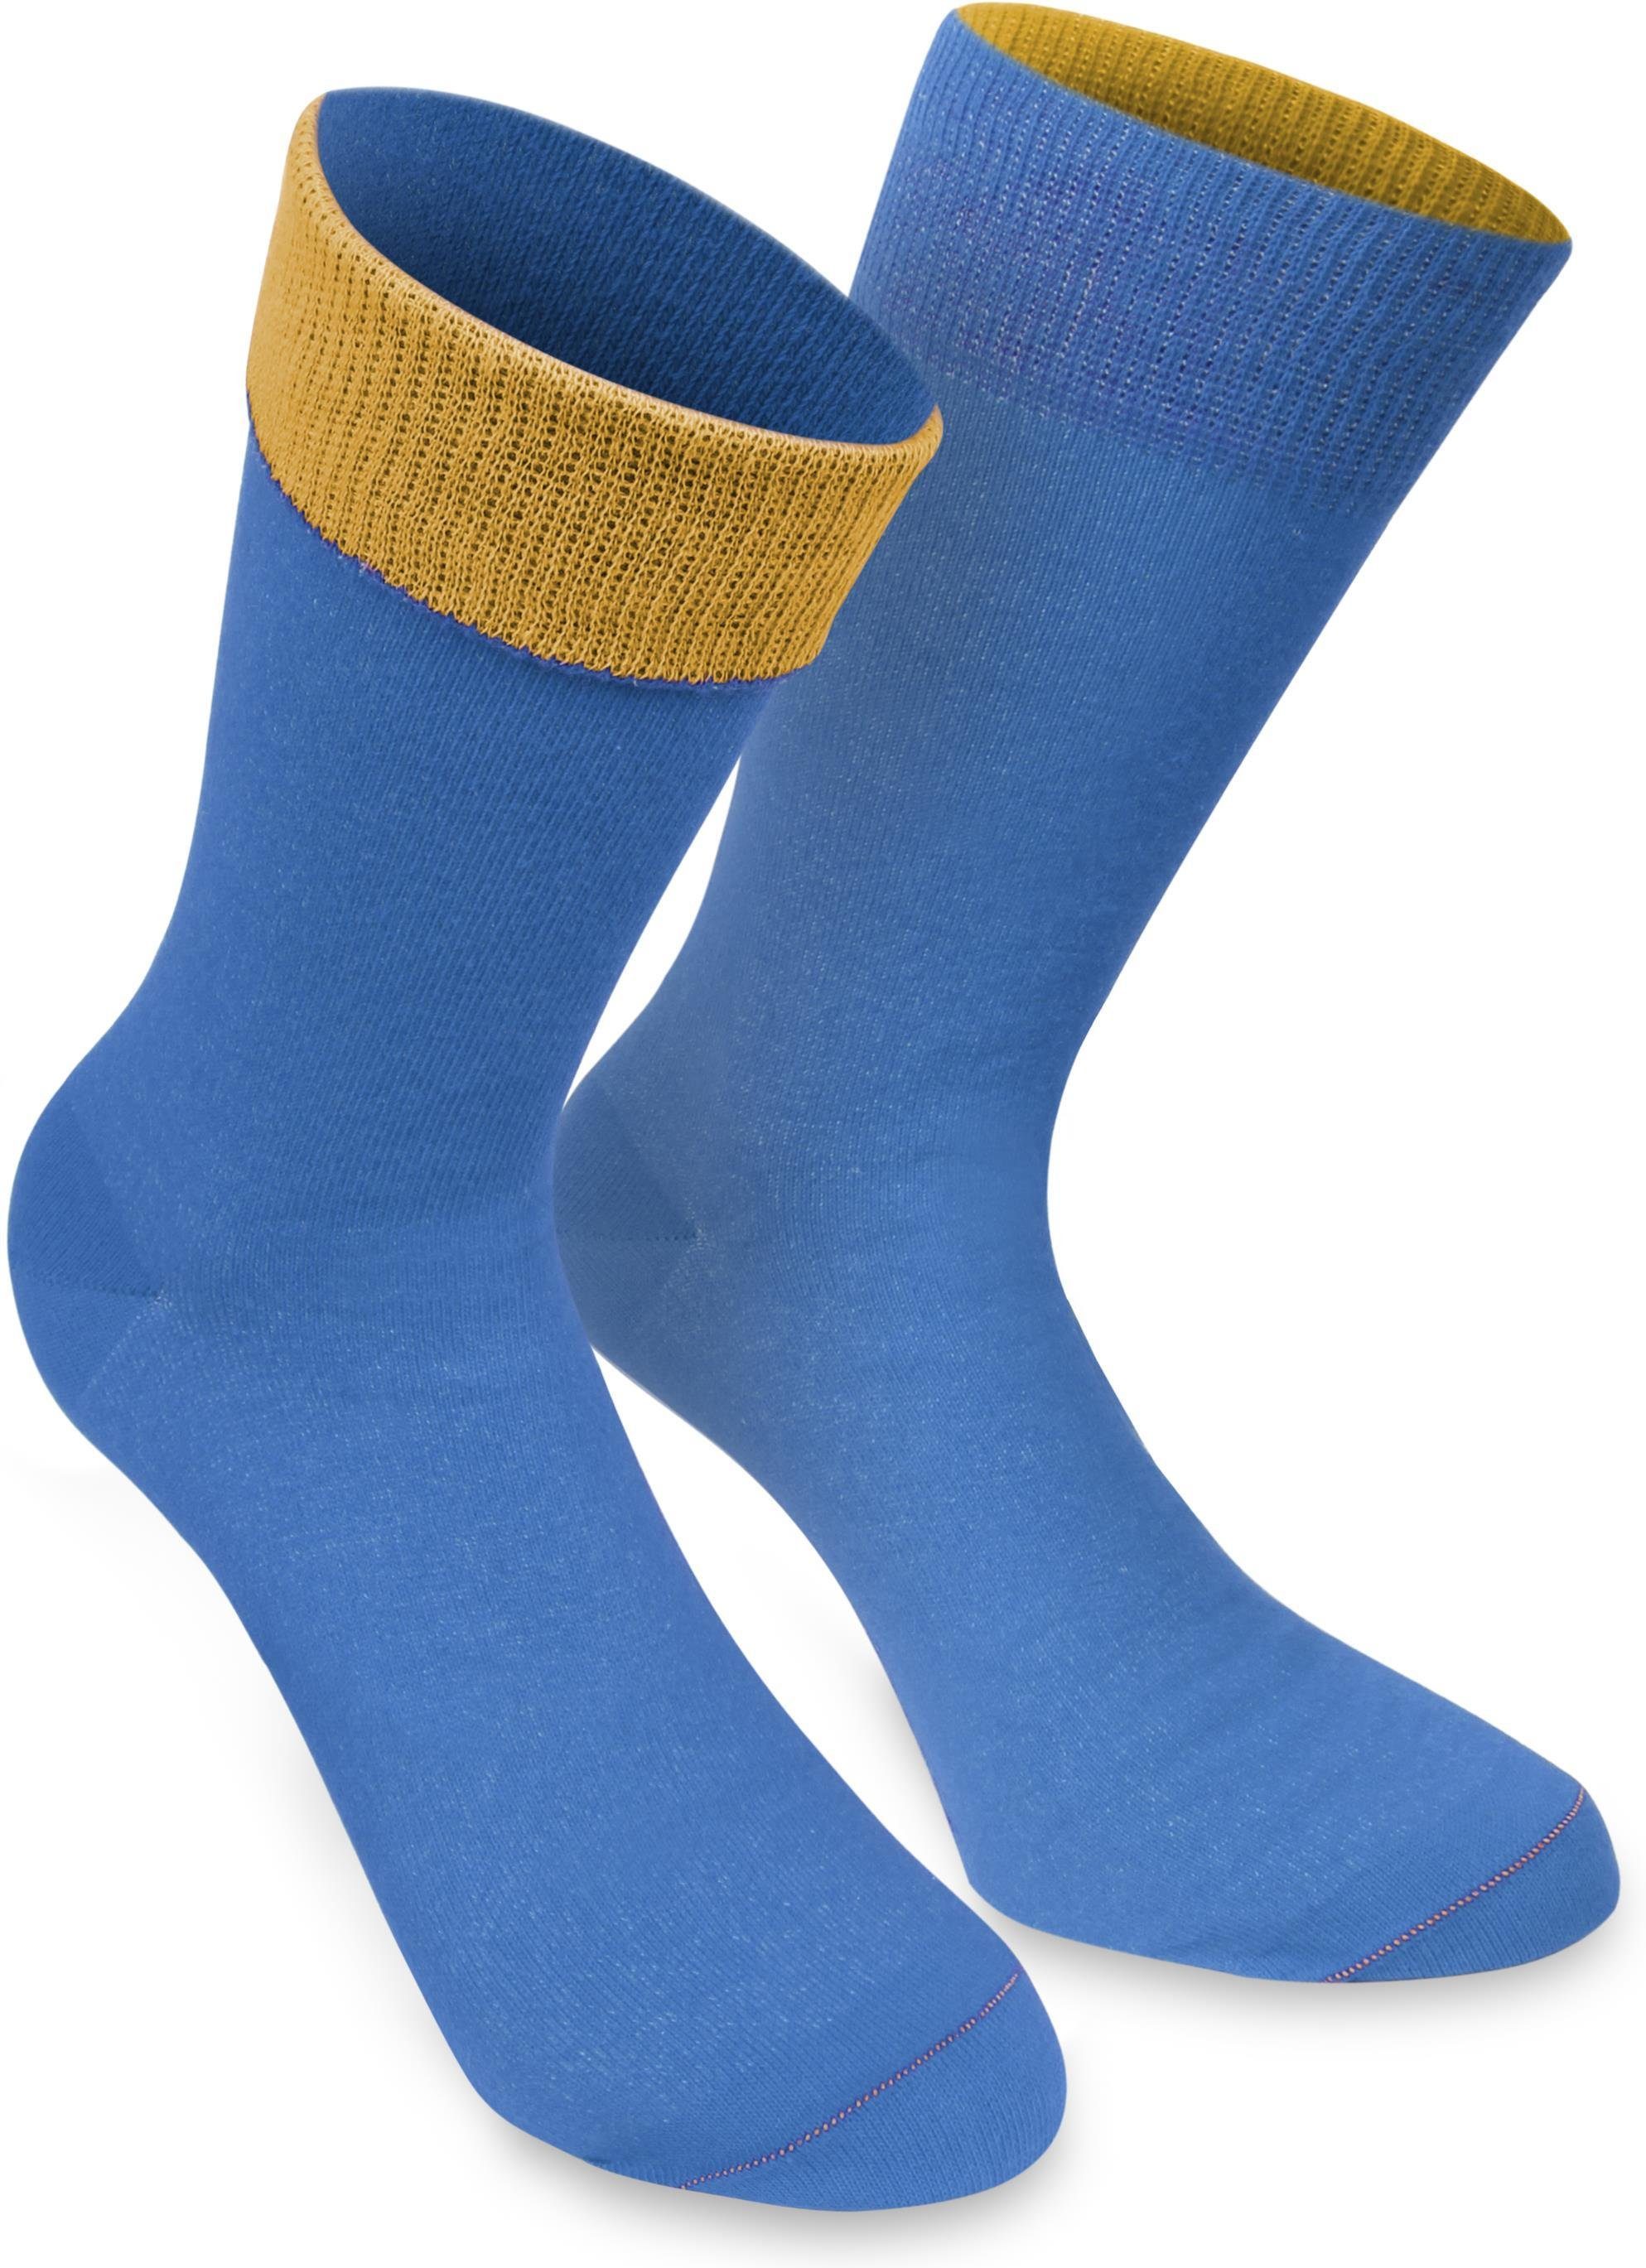 Socken Himmelblau/Aprikose Basicsocken Paar (1 Bund farbig normani Bi-Color Paar) abgesetzter 1